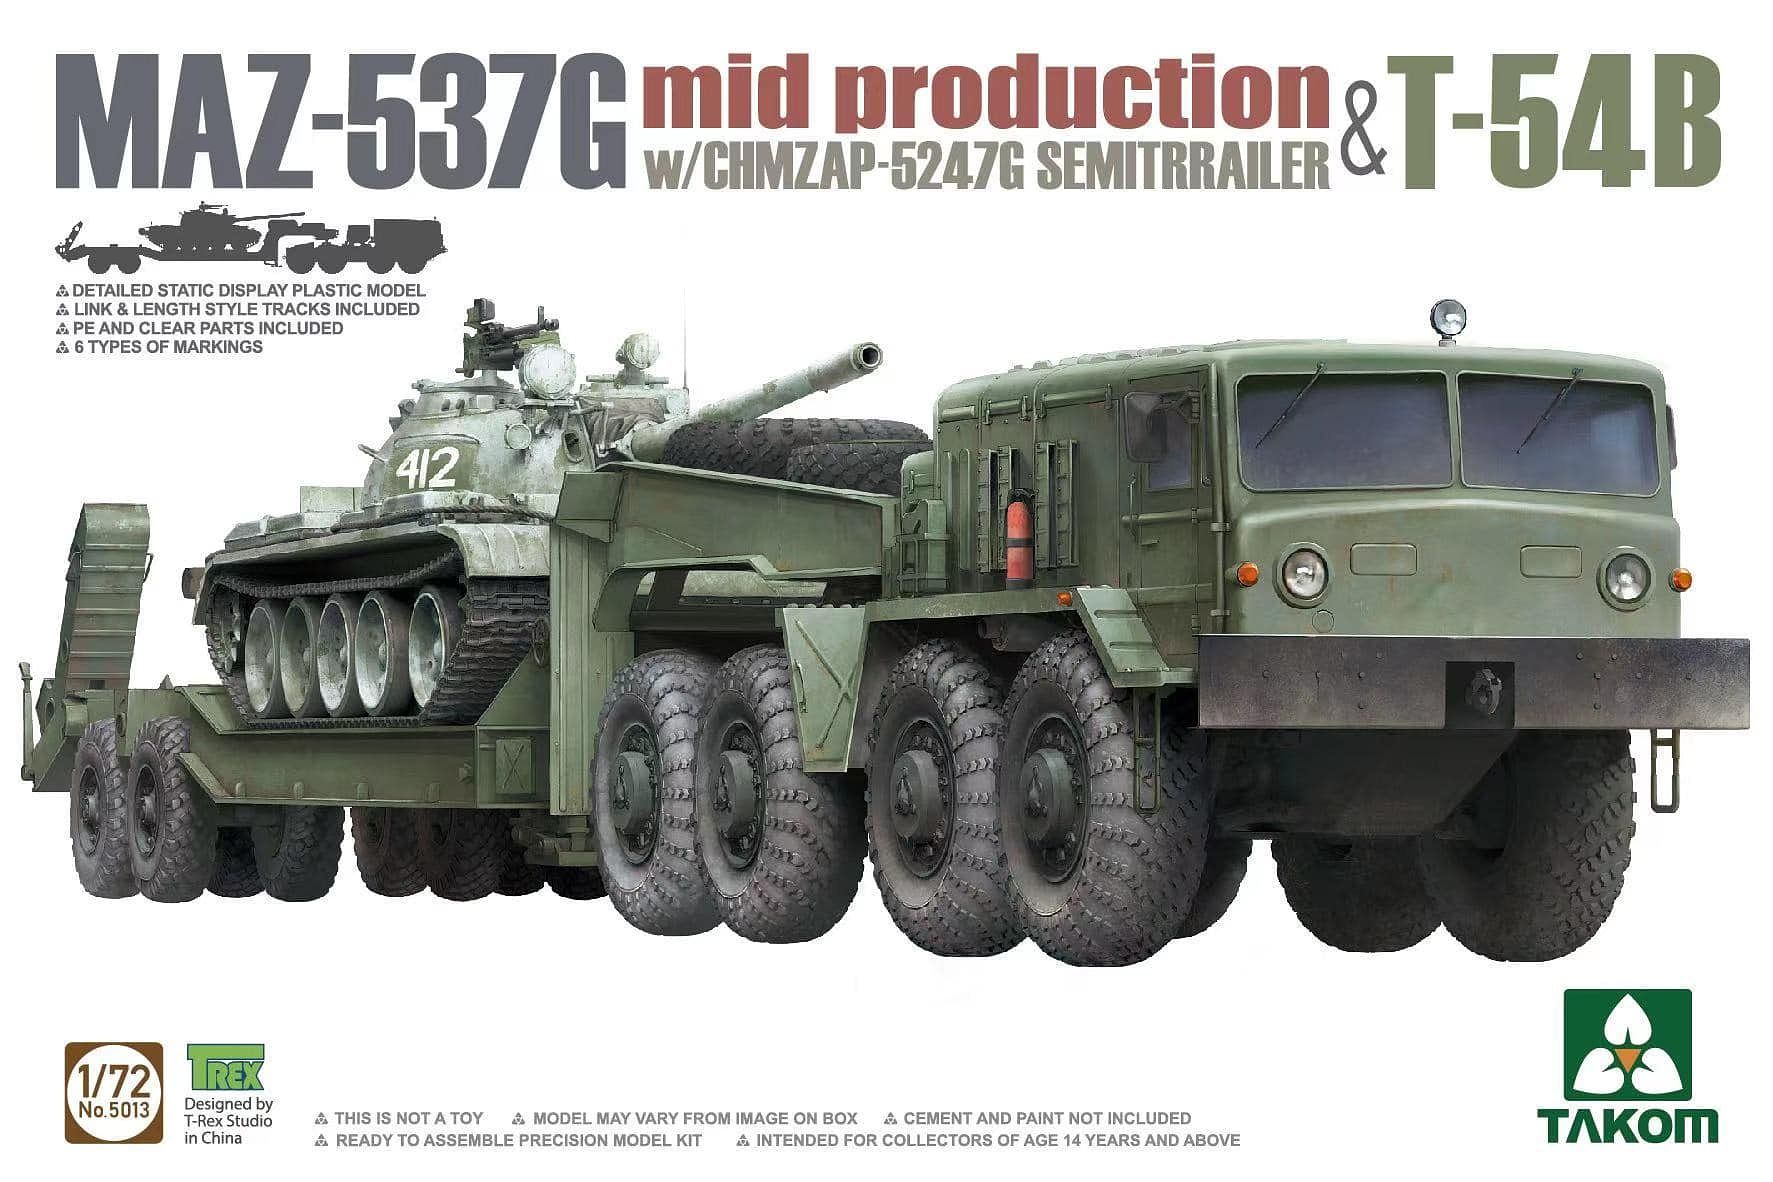 TKO5013 タコム 1/72 ロシア軍 MAZ-537G トラクター w/CHMZAP-5247G セミトレーラー 戦車運搬車 & T-54B  中戦車